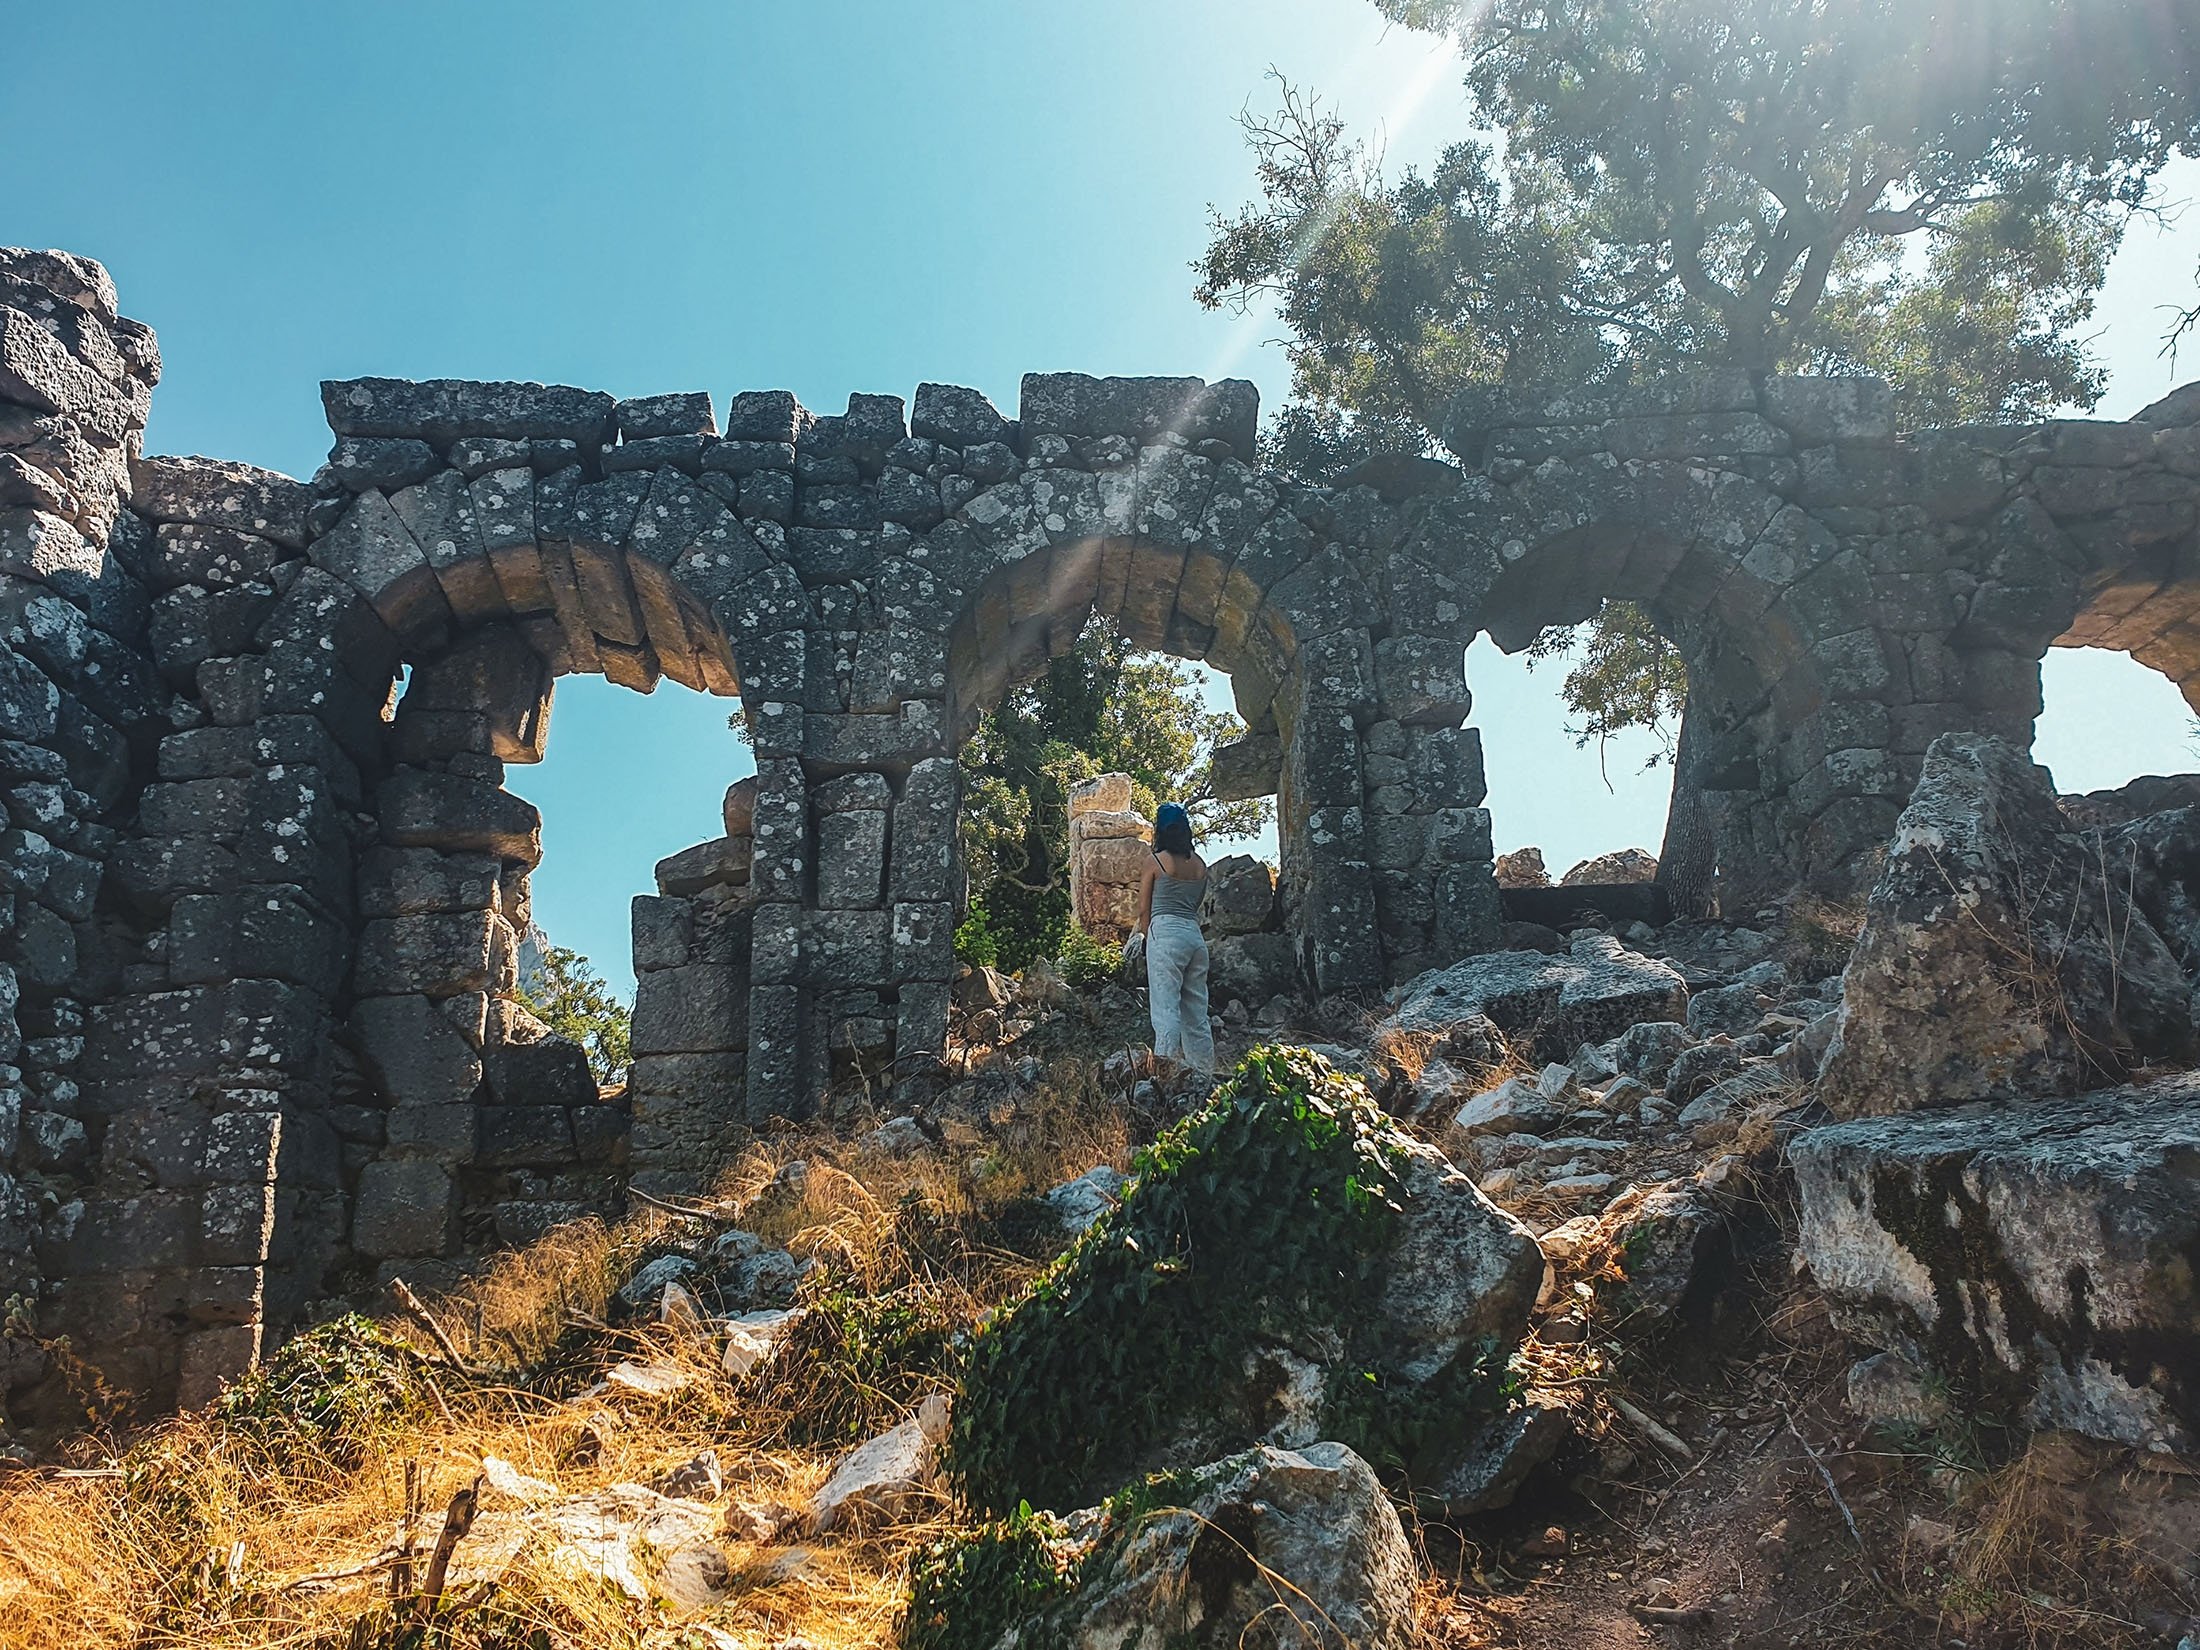 The bath ruins of Termessos, Antalya, Turkey. (Photo by Argun Konuk)